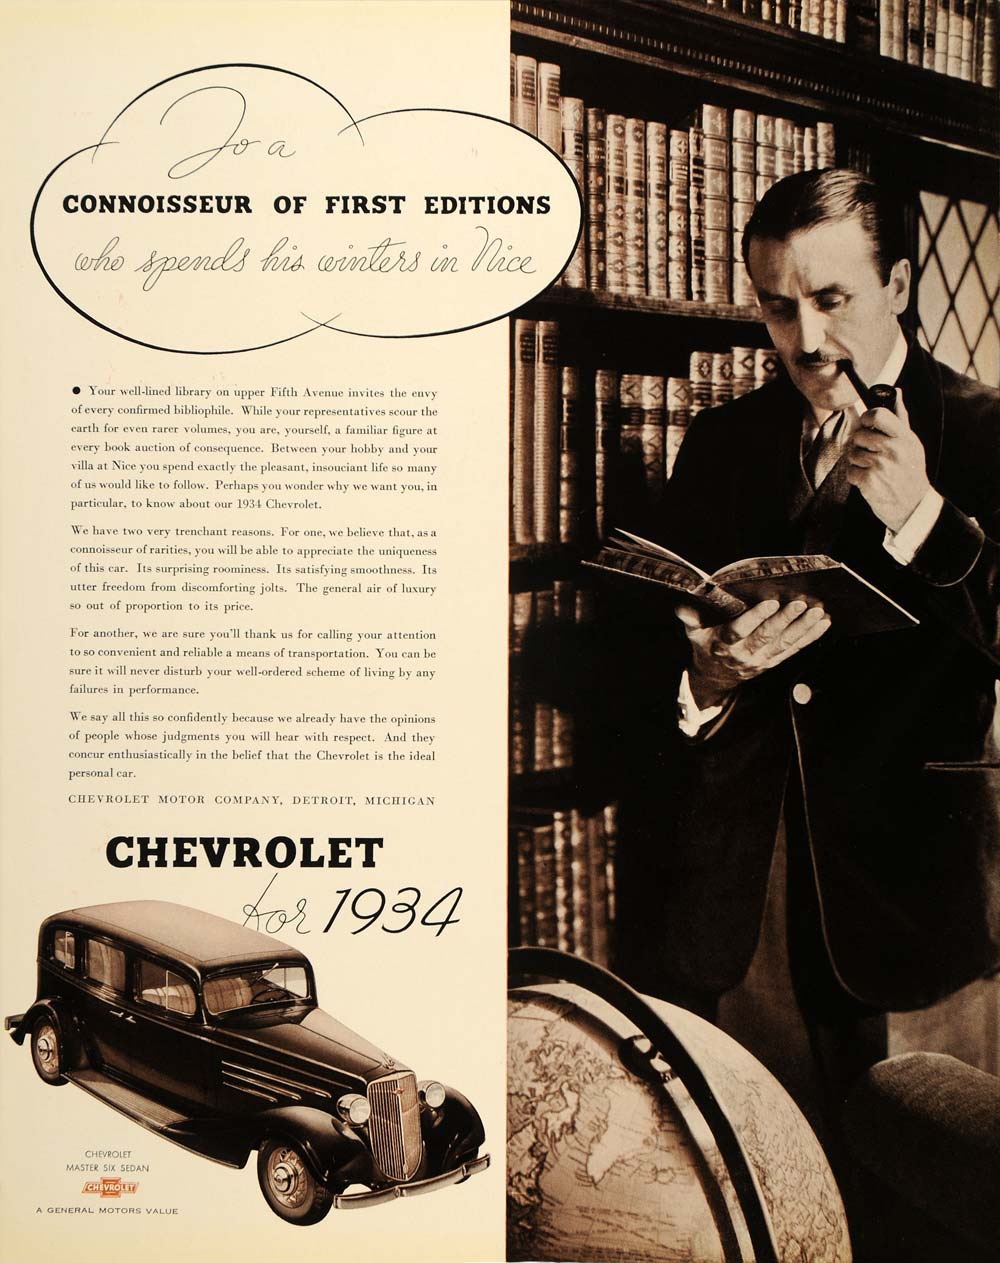 1934 Ad Chevrolet Connoisseur First Edition Automobile - ORIGINAL FTT9